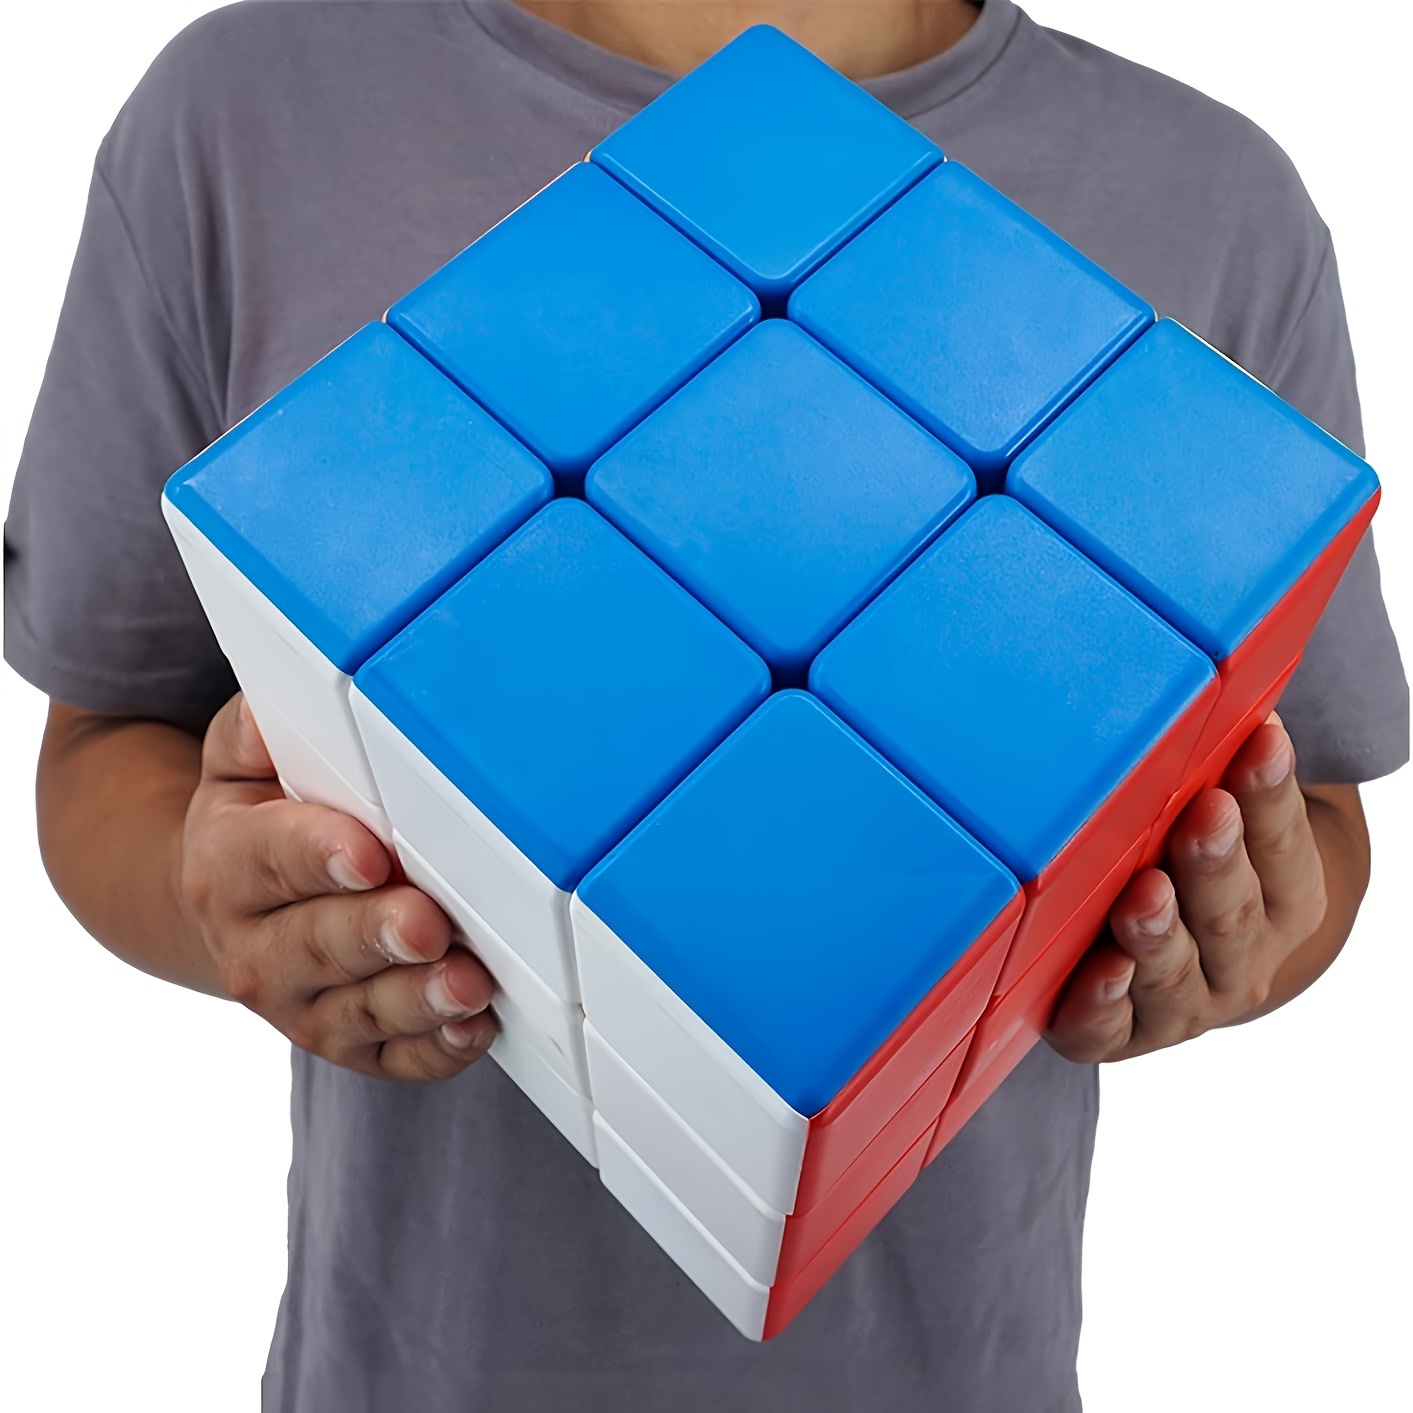 

Giant Magic Cube 3x3x3 Super Large Magic Cube 18cm No Stickers Educational Big Cube Toys Gift